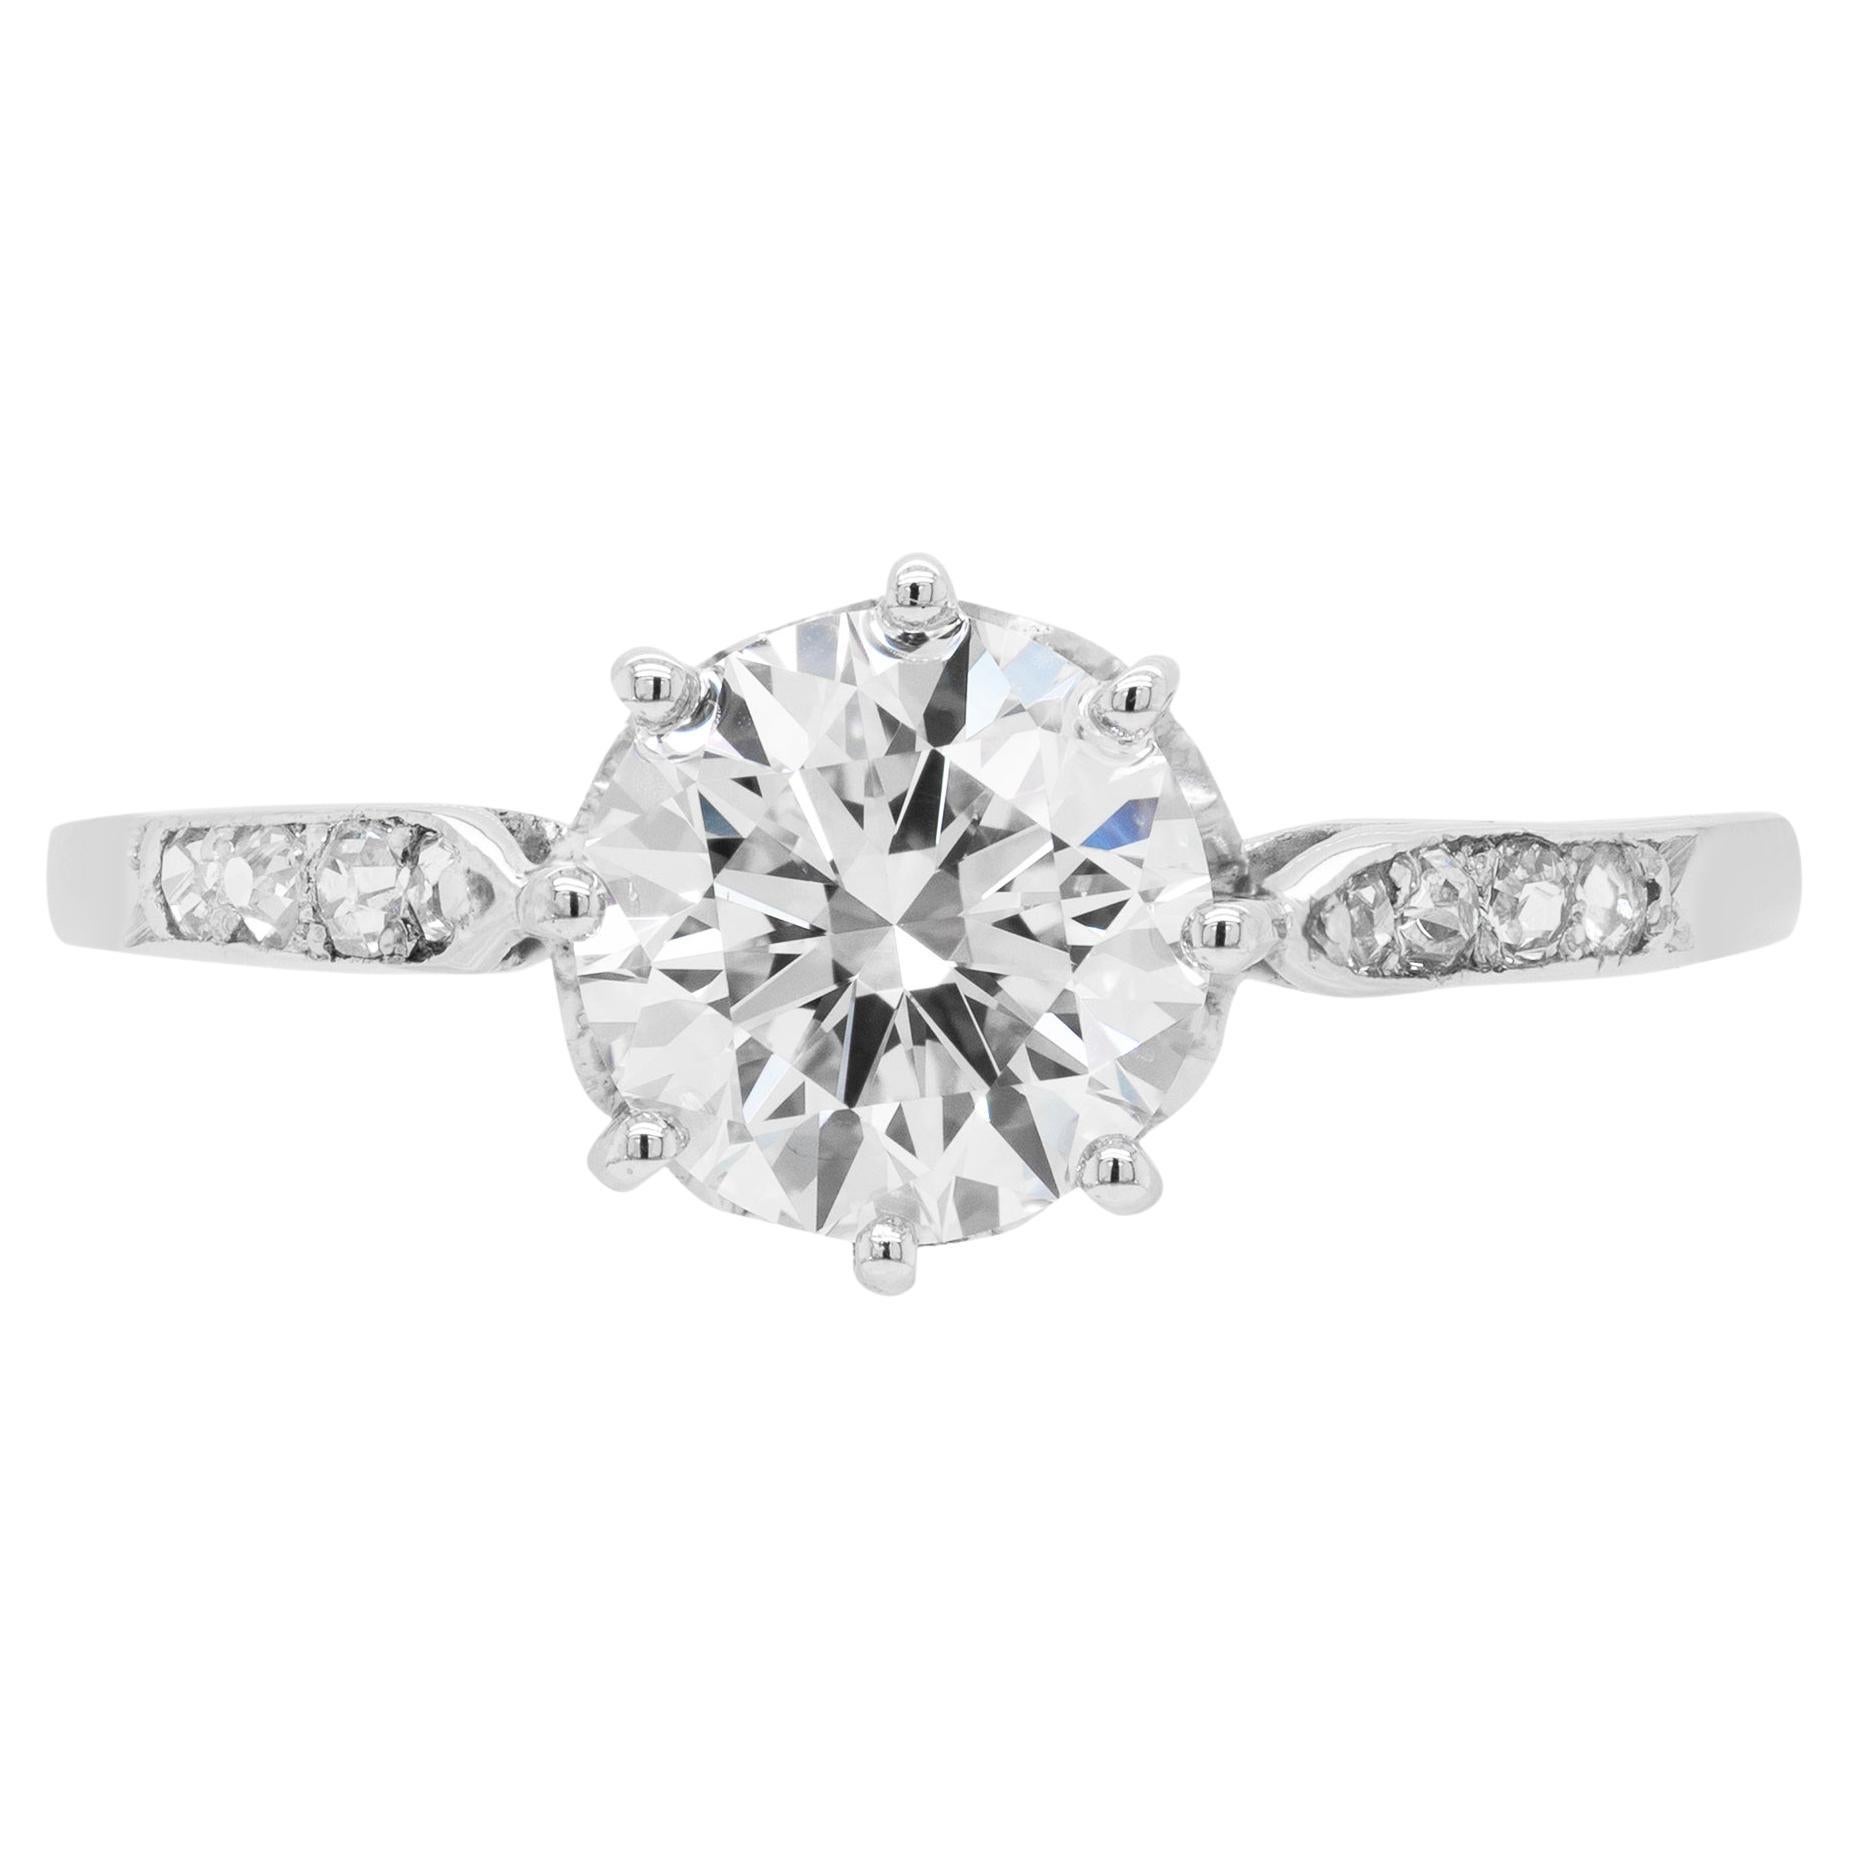 Vintage 1.37 Carat Old Cut Diamond Platinum Engagement Ring, circa 1950s For Sale